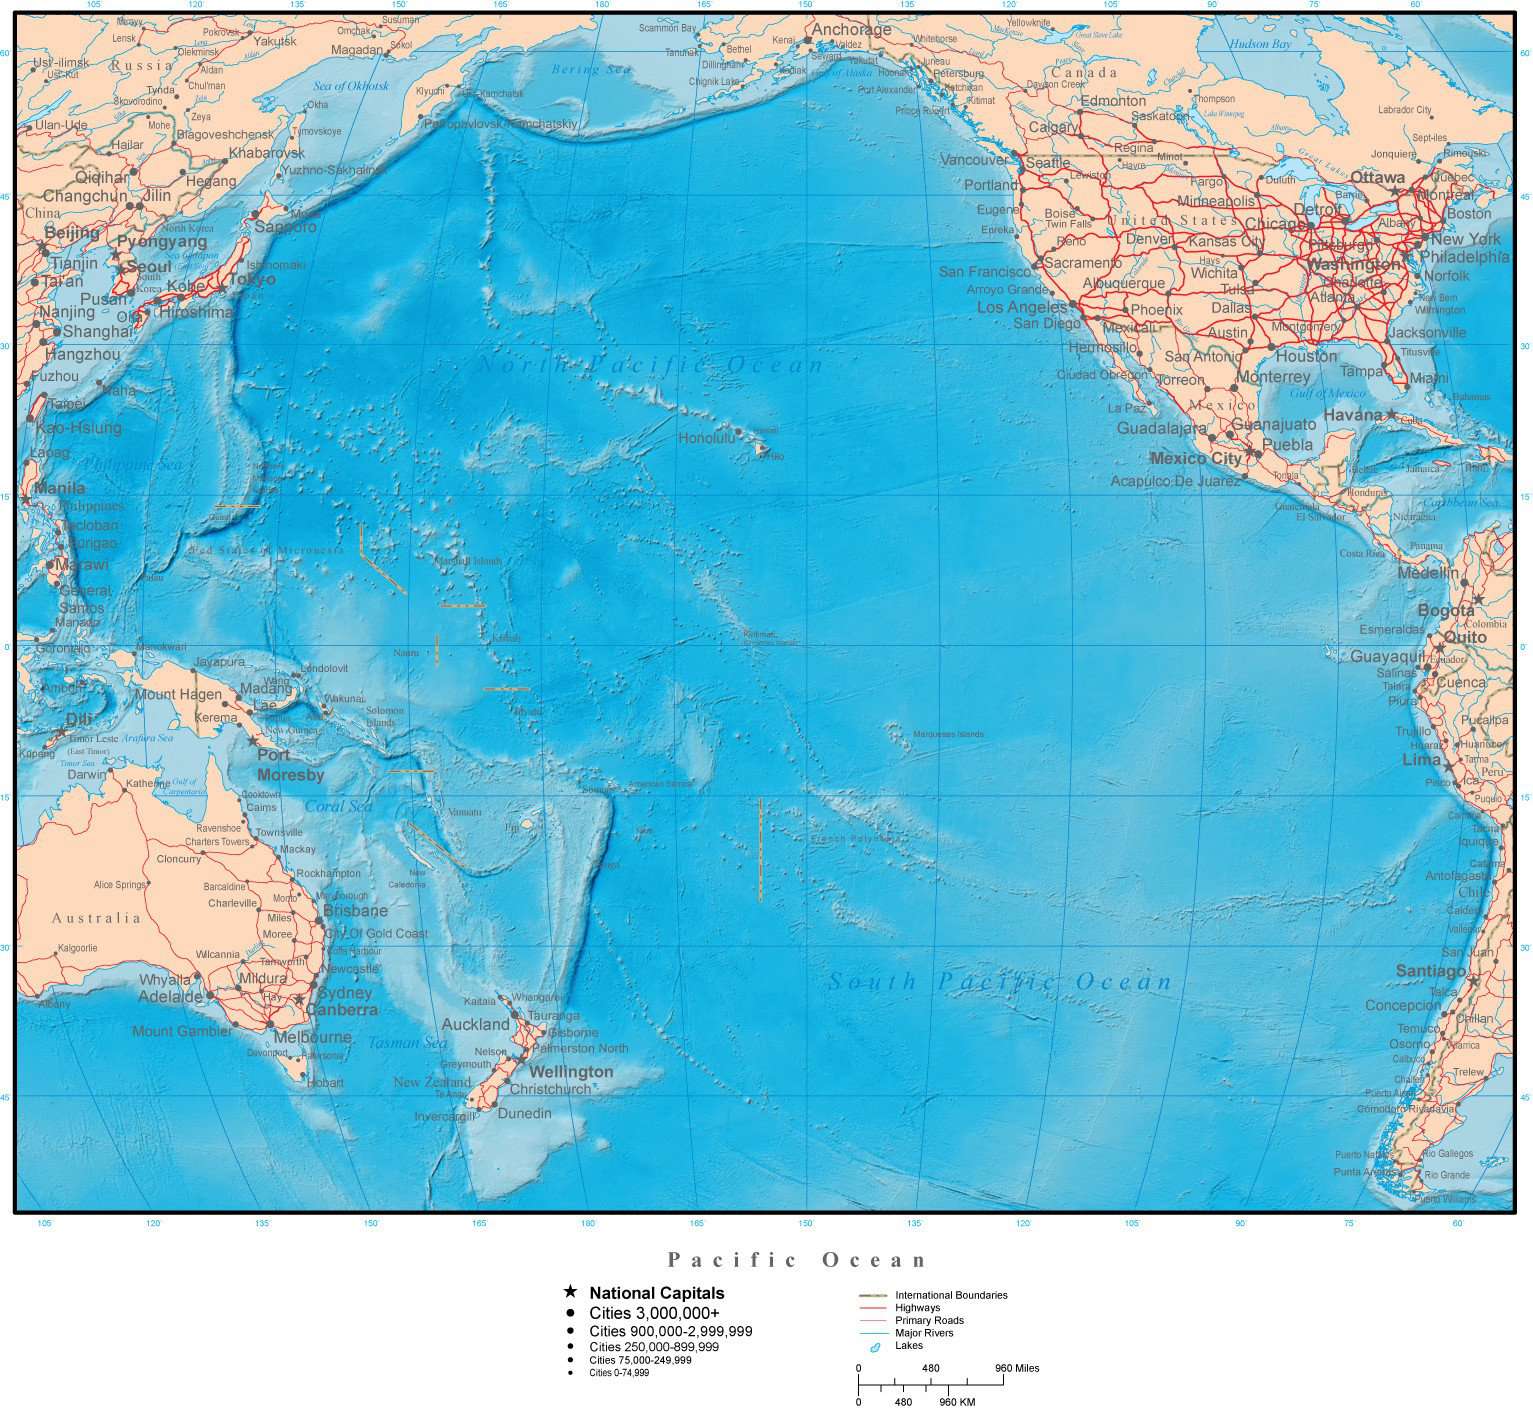 Pacific Ocean Terrain map in Adobe Illustrator - Photoshop Format